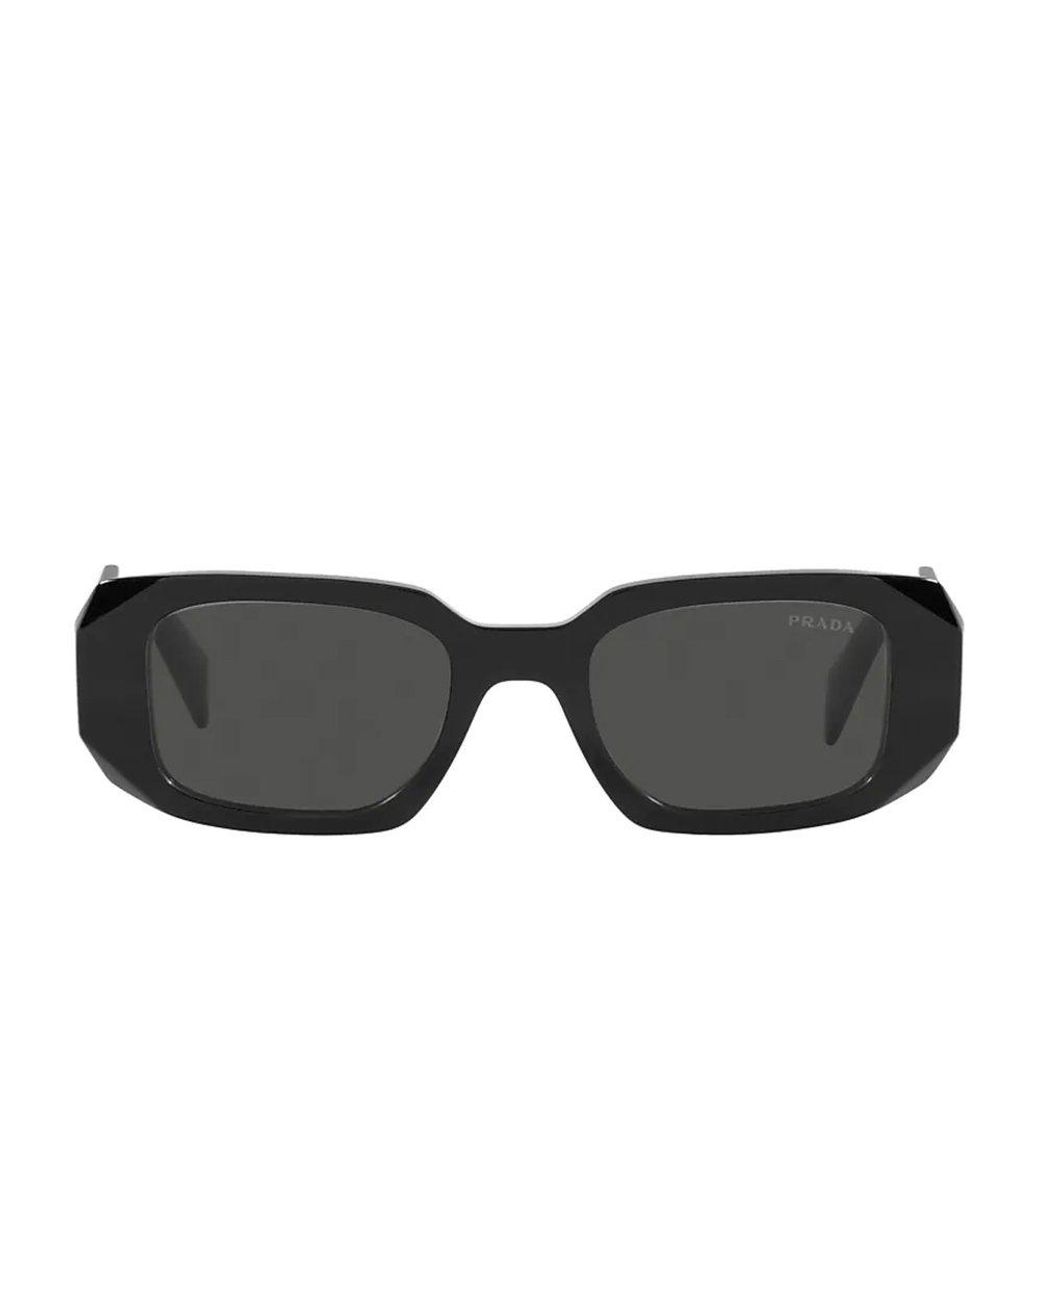 Prada Rectangular Frame Sunglasses in Gray | Lyst